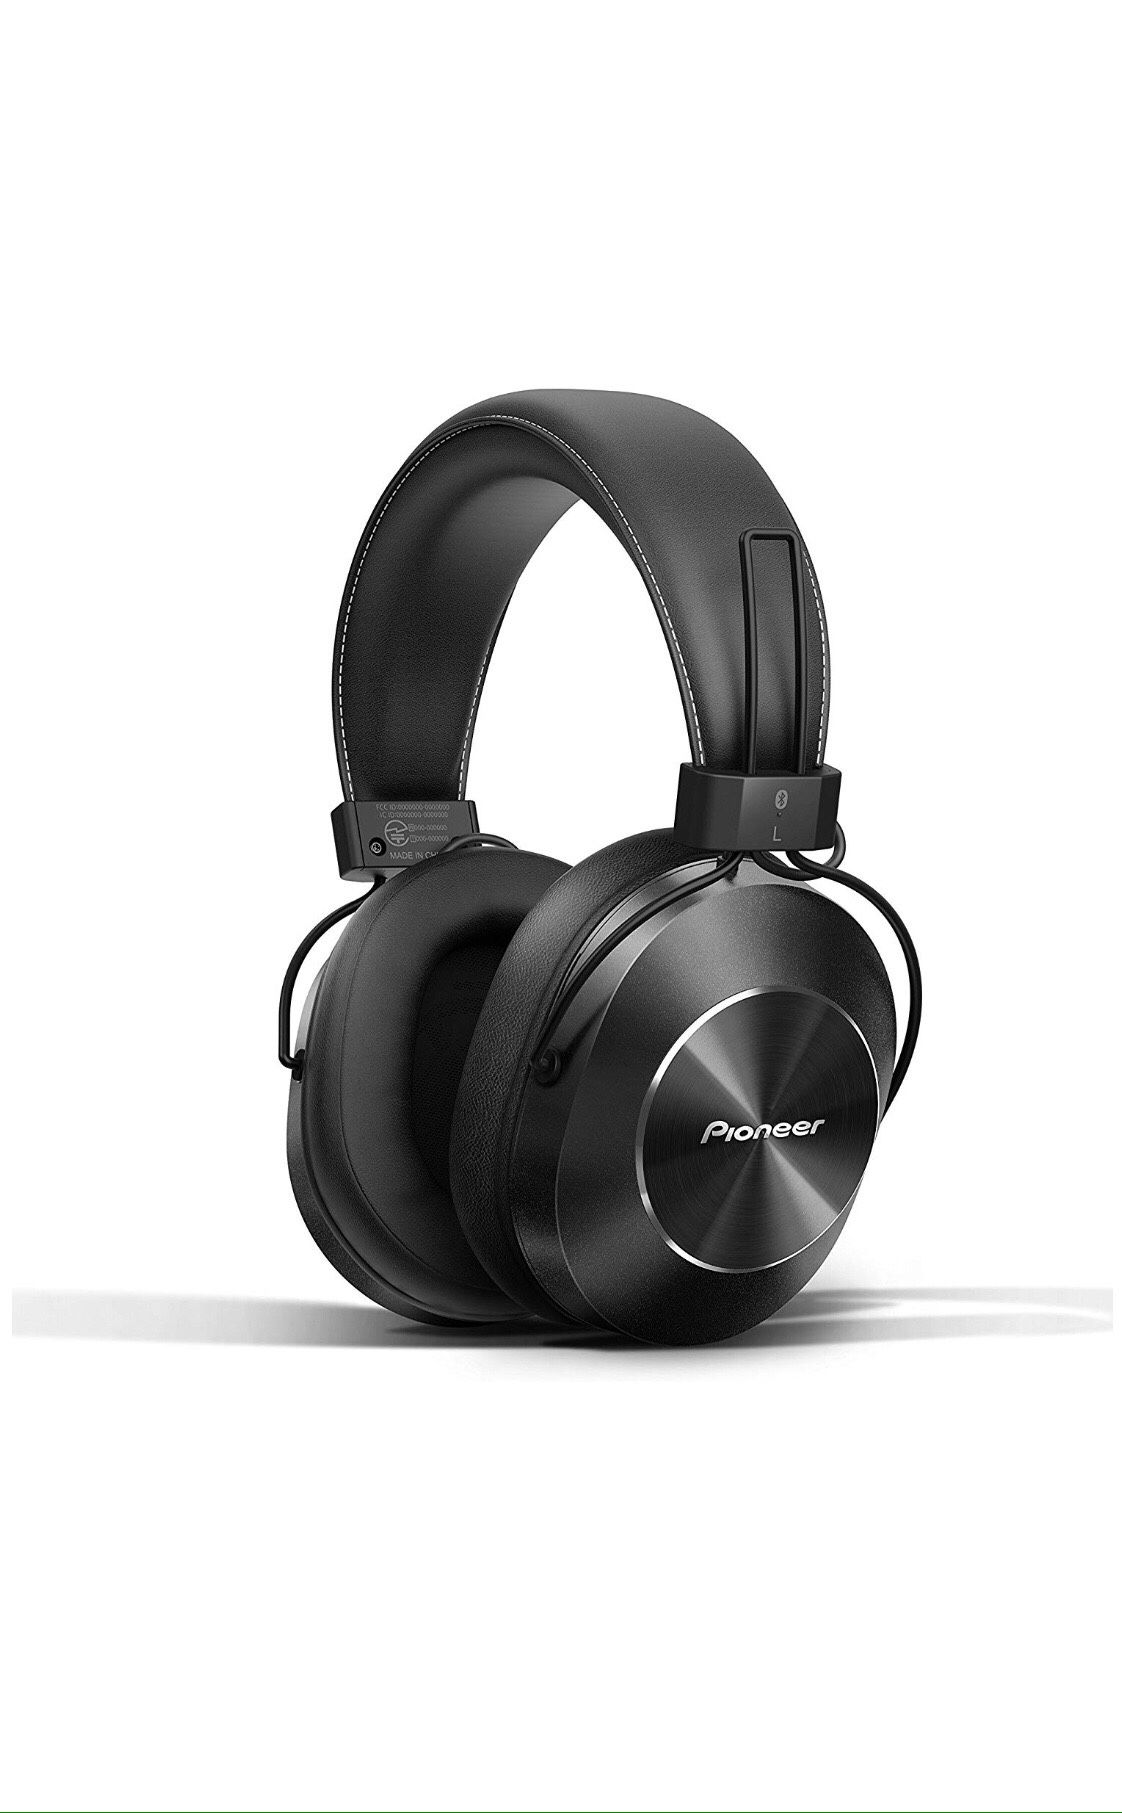 Pioneer studio headphones wireless and wired beats by dre destroyer bass sports earphones earbuds Sony